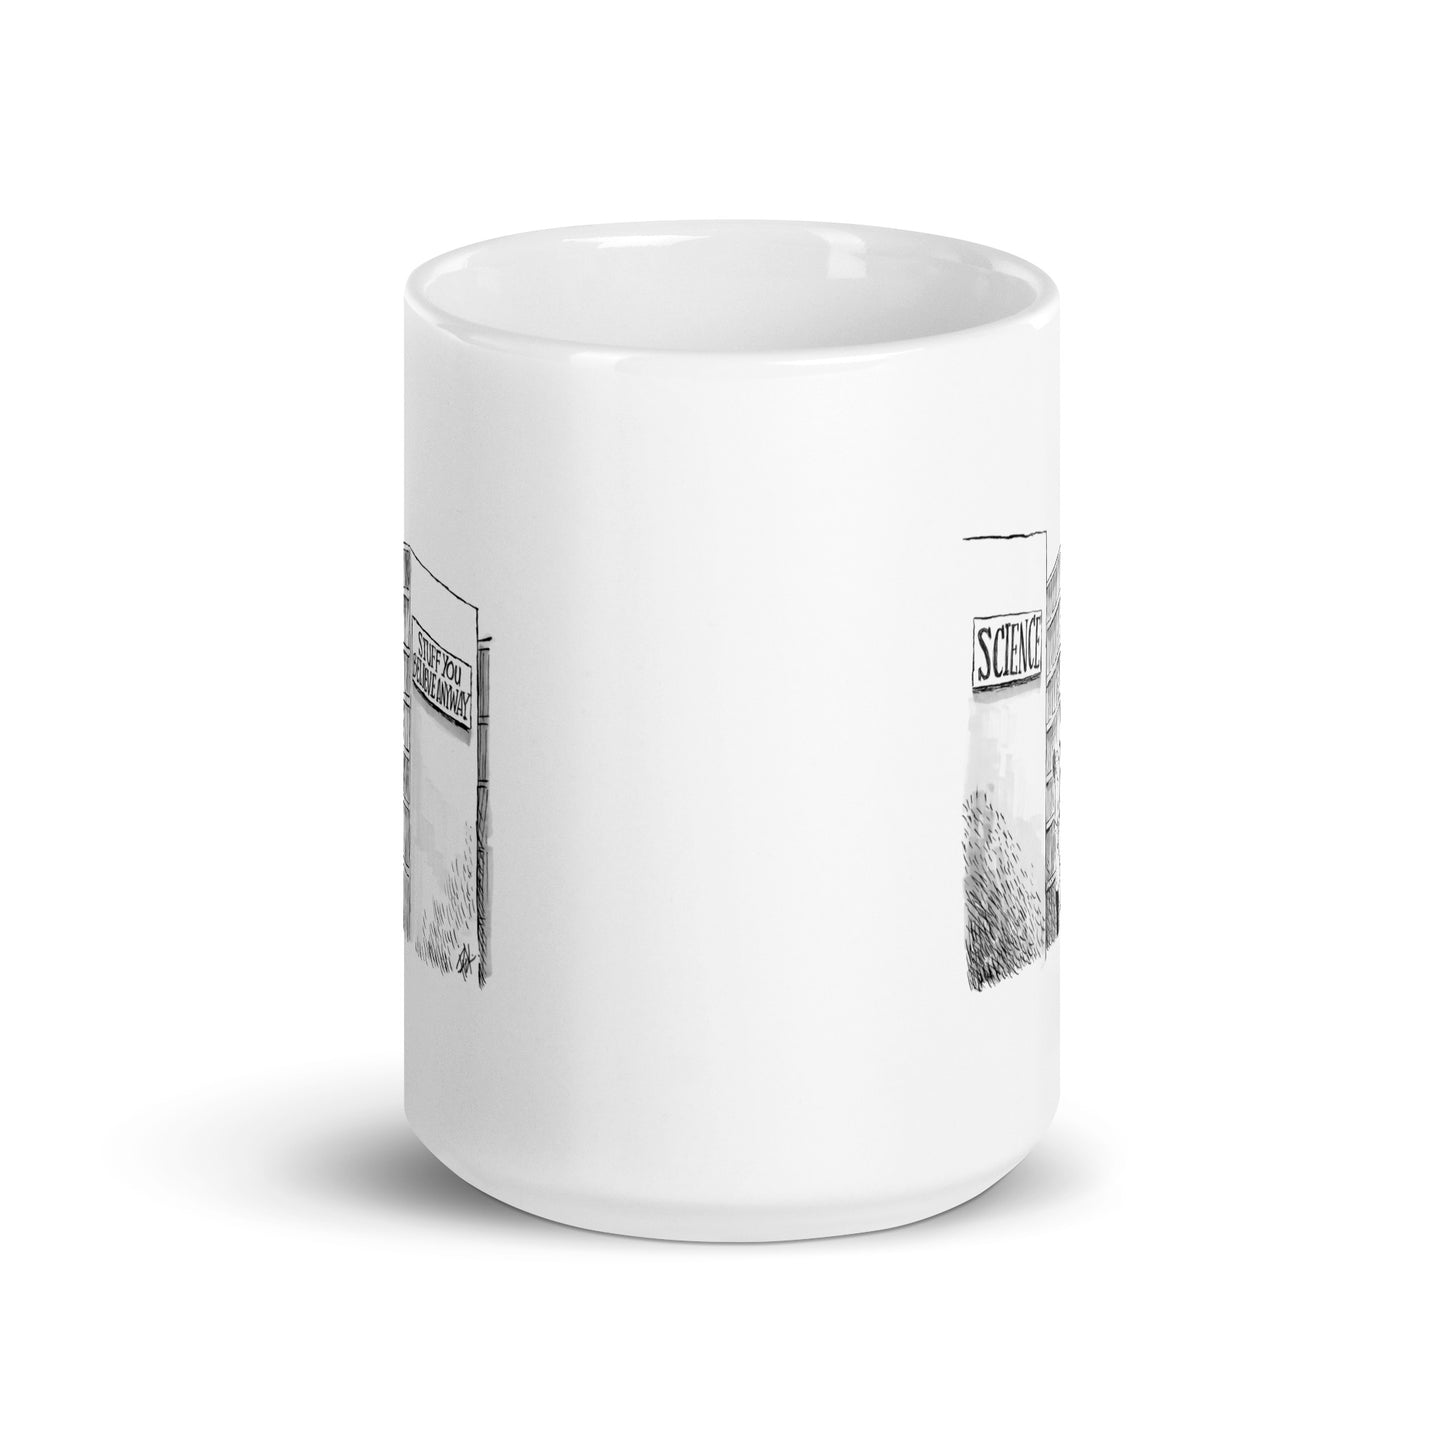 Science - White Glossy Mug by RICK BALDWIN